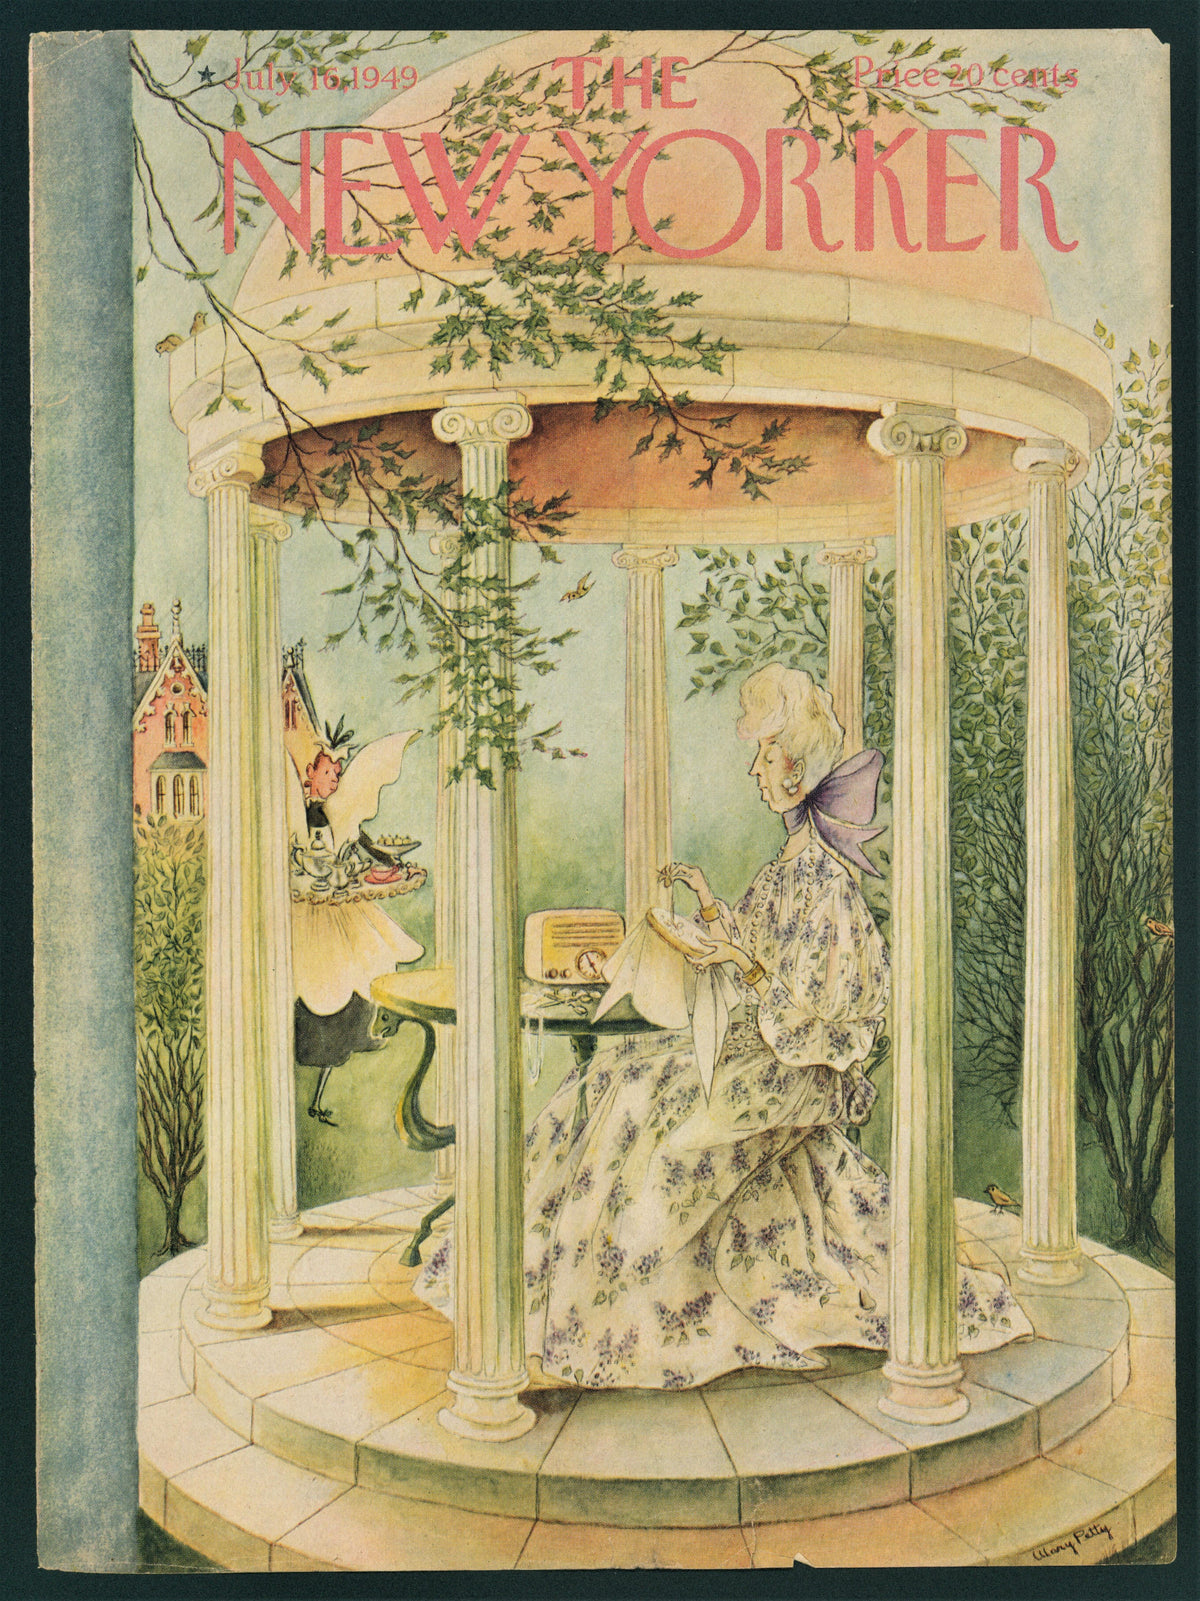 New Yorker Magazine Cover_9 - Authentic Vintage Antique Print